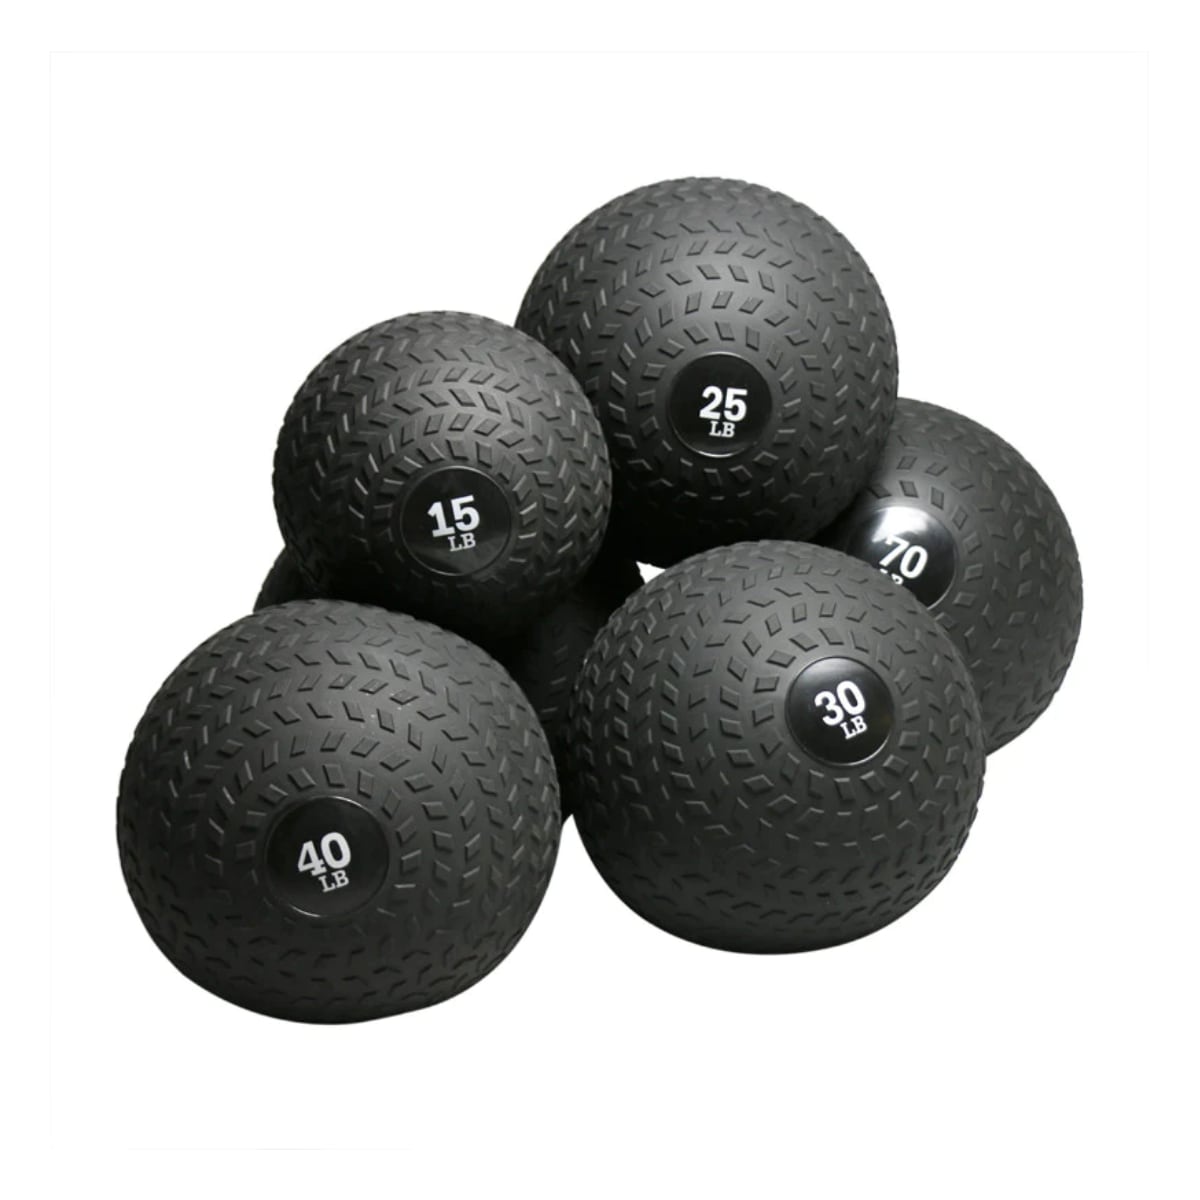 Brug American barbell AmericanBarbell Slam ball 30 lb til en forbedret oplevelse